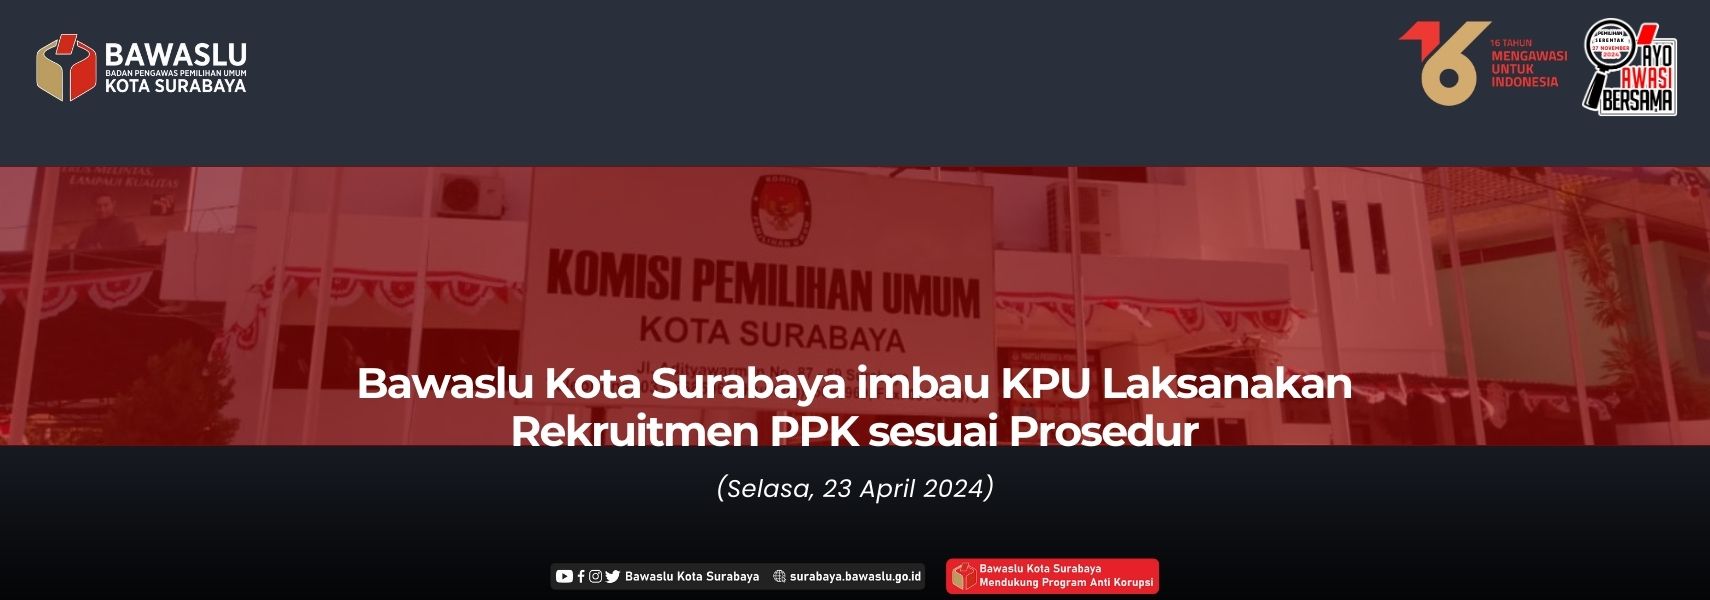 Imbau KPU Rekrut PPK sesuai Prosedur